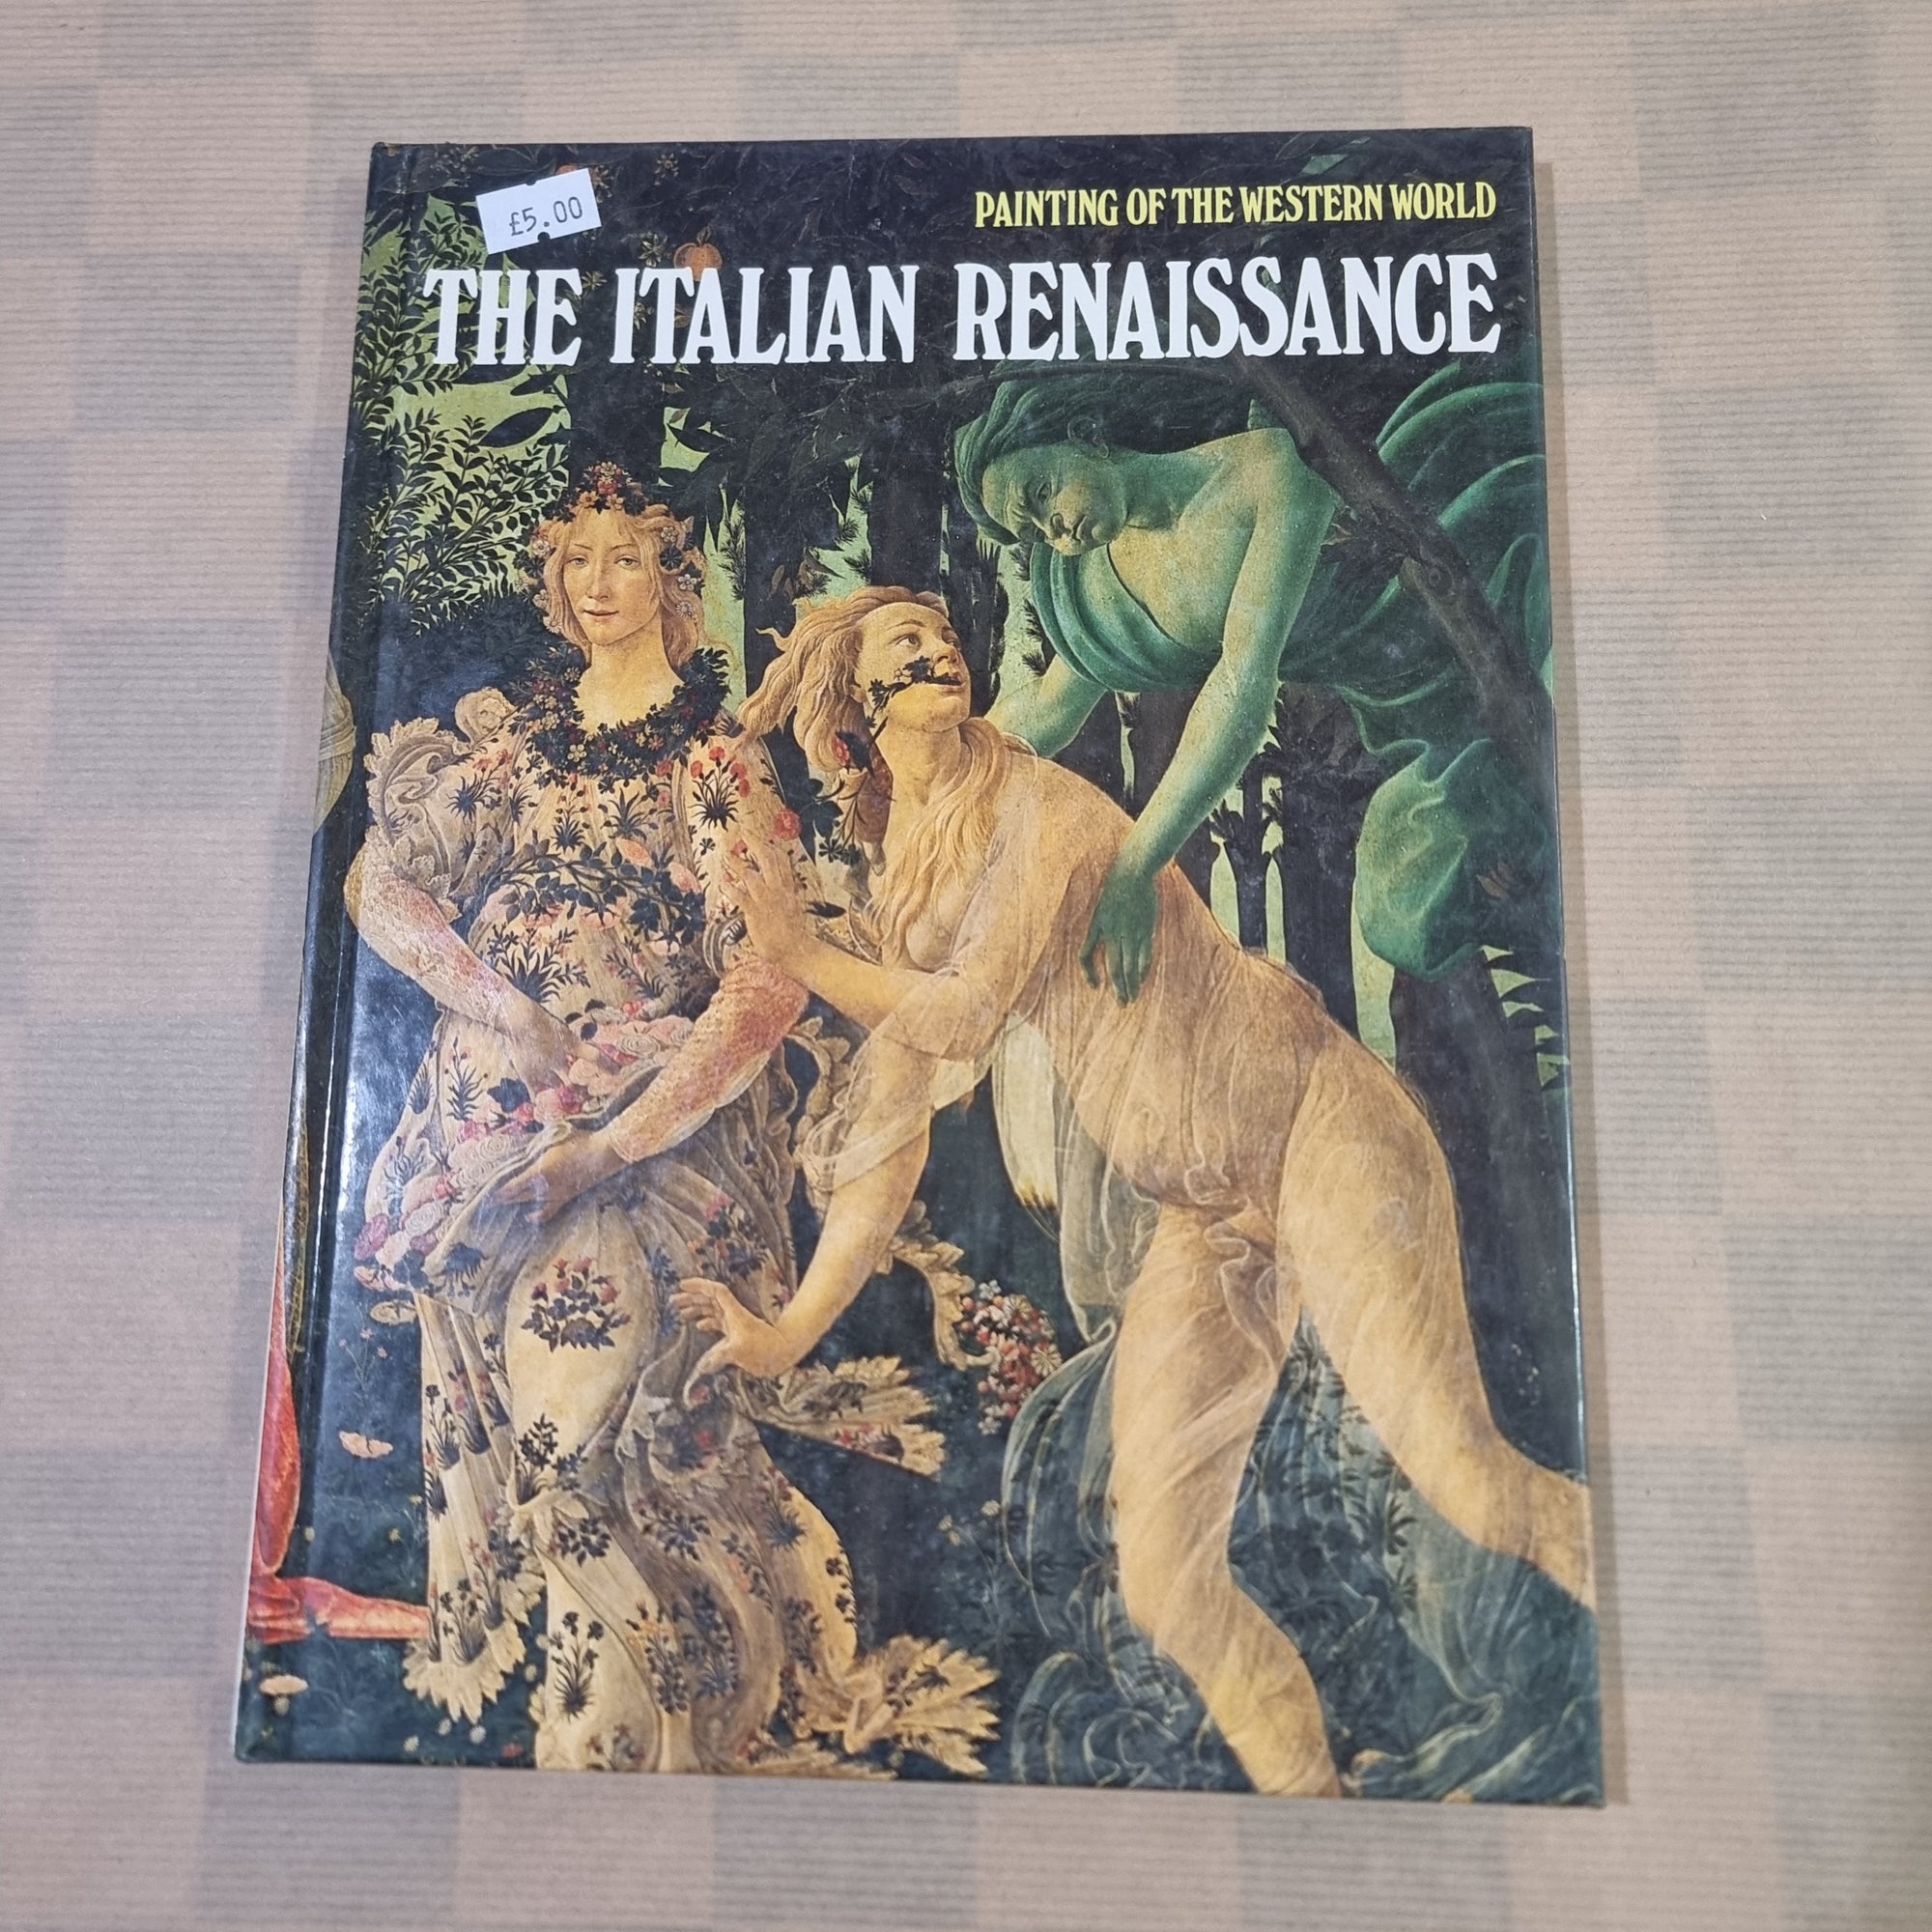 The Italian Renaissance book